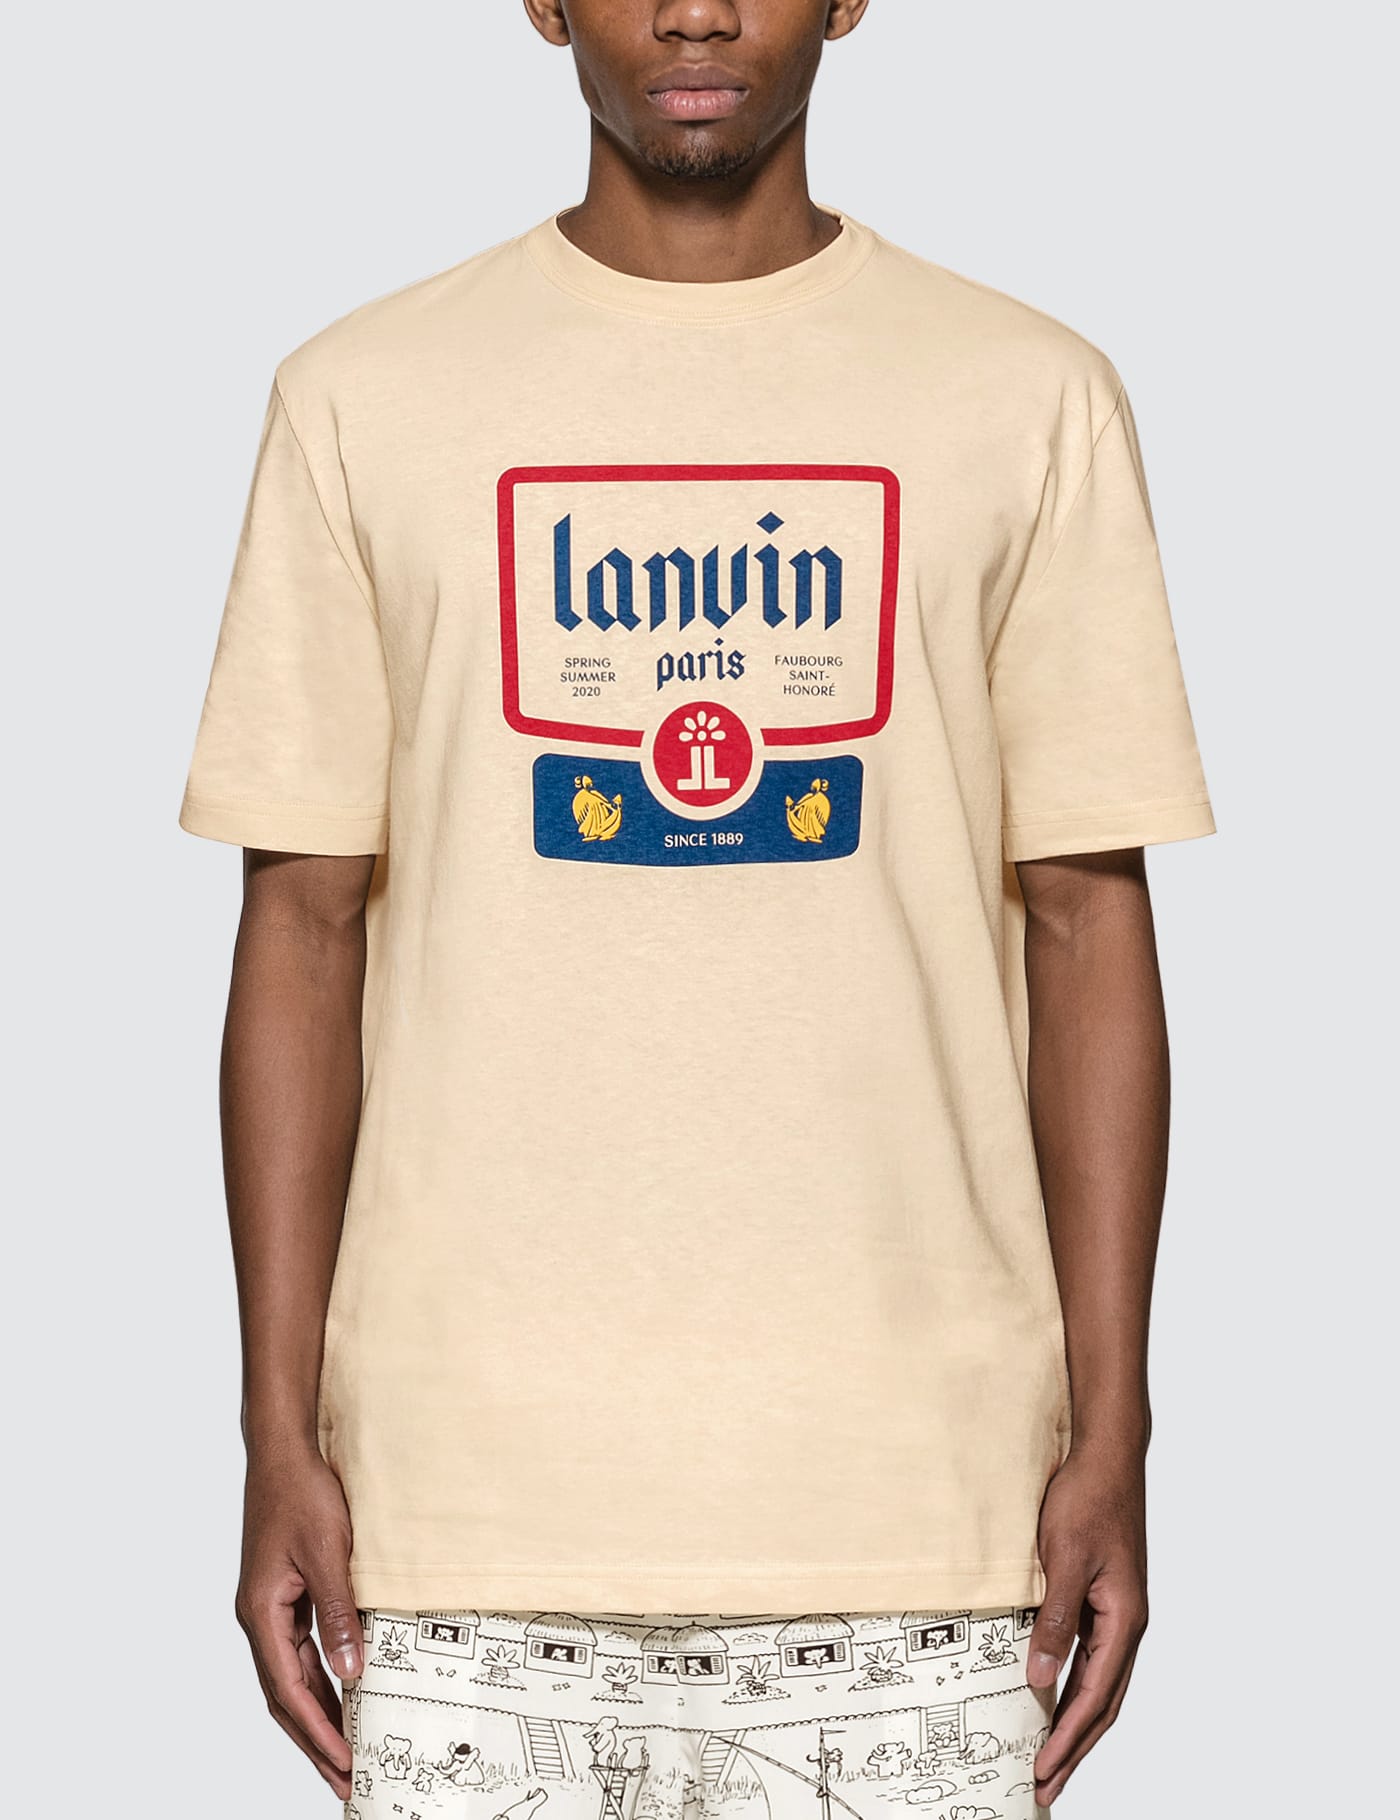 Kleding Gender-neutrale kleding volwassenen Tops & T-shirts T-shirts Vintage Lanvin Shirt Bumby herten Monogram patern klassieker 